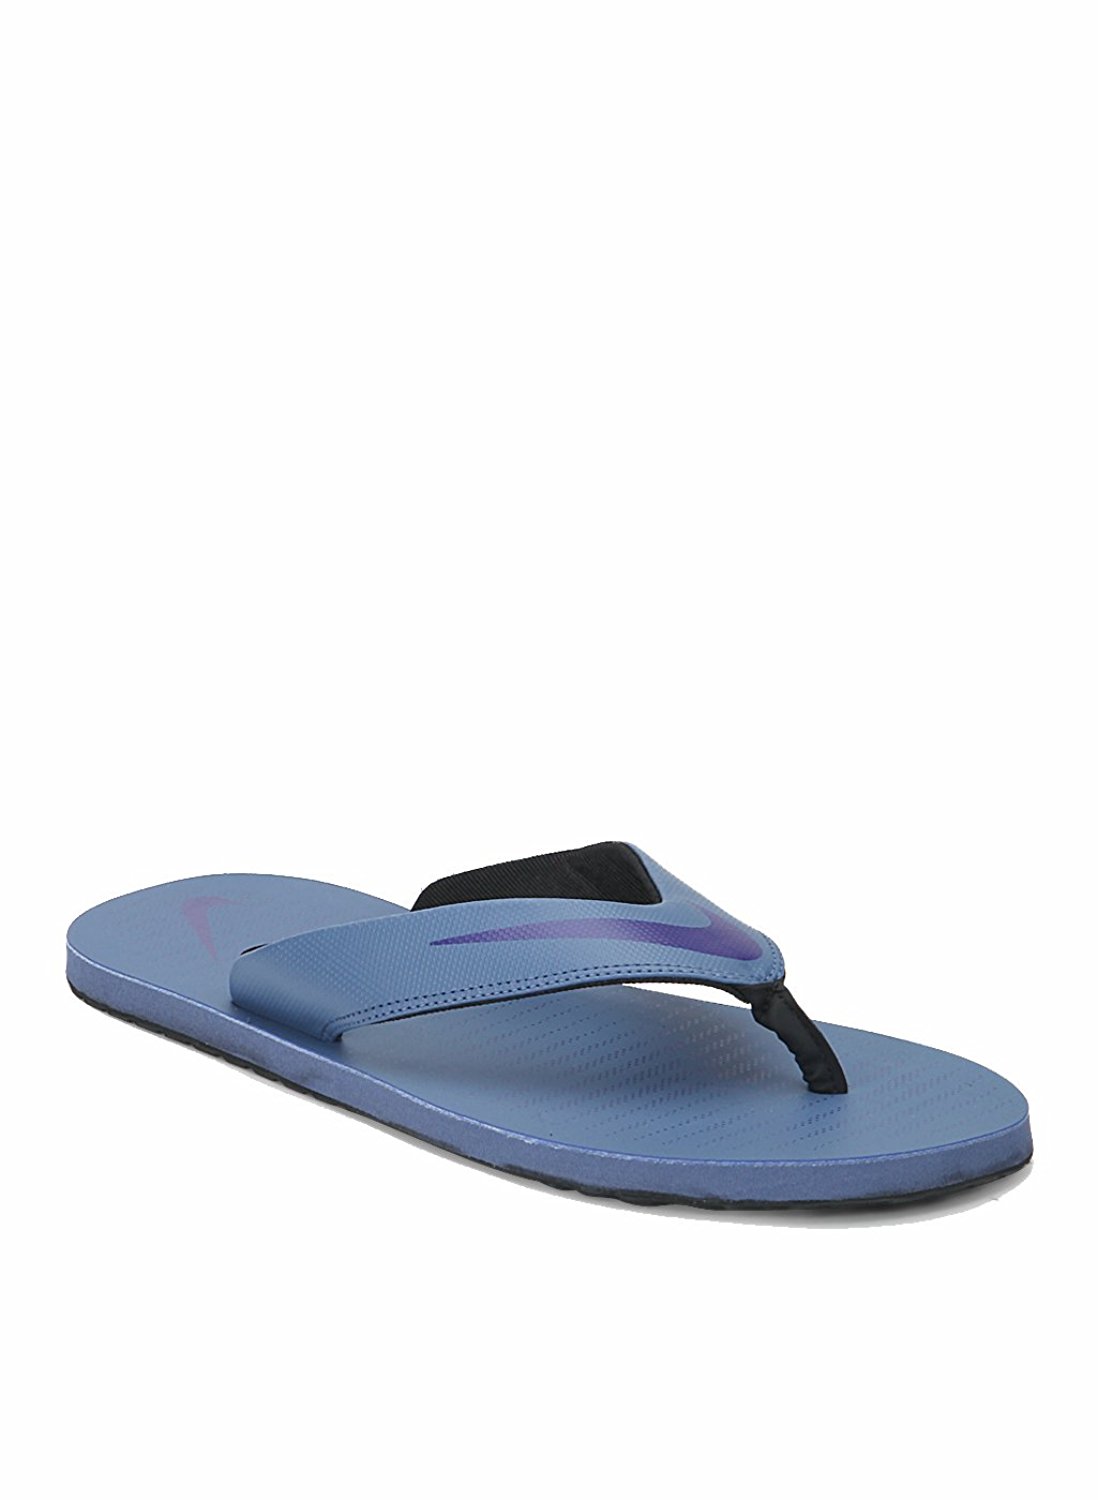 Buy Nike Men'S Chroma Thong 5 Blue Slippers Online @ ₹1395 from ShopClues